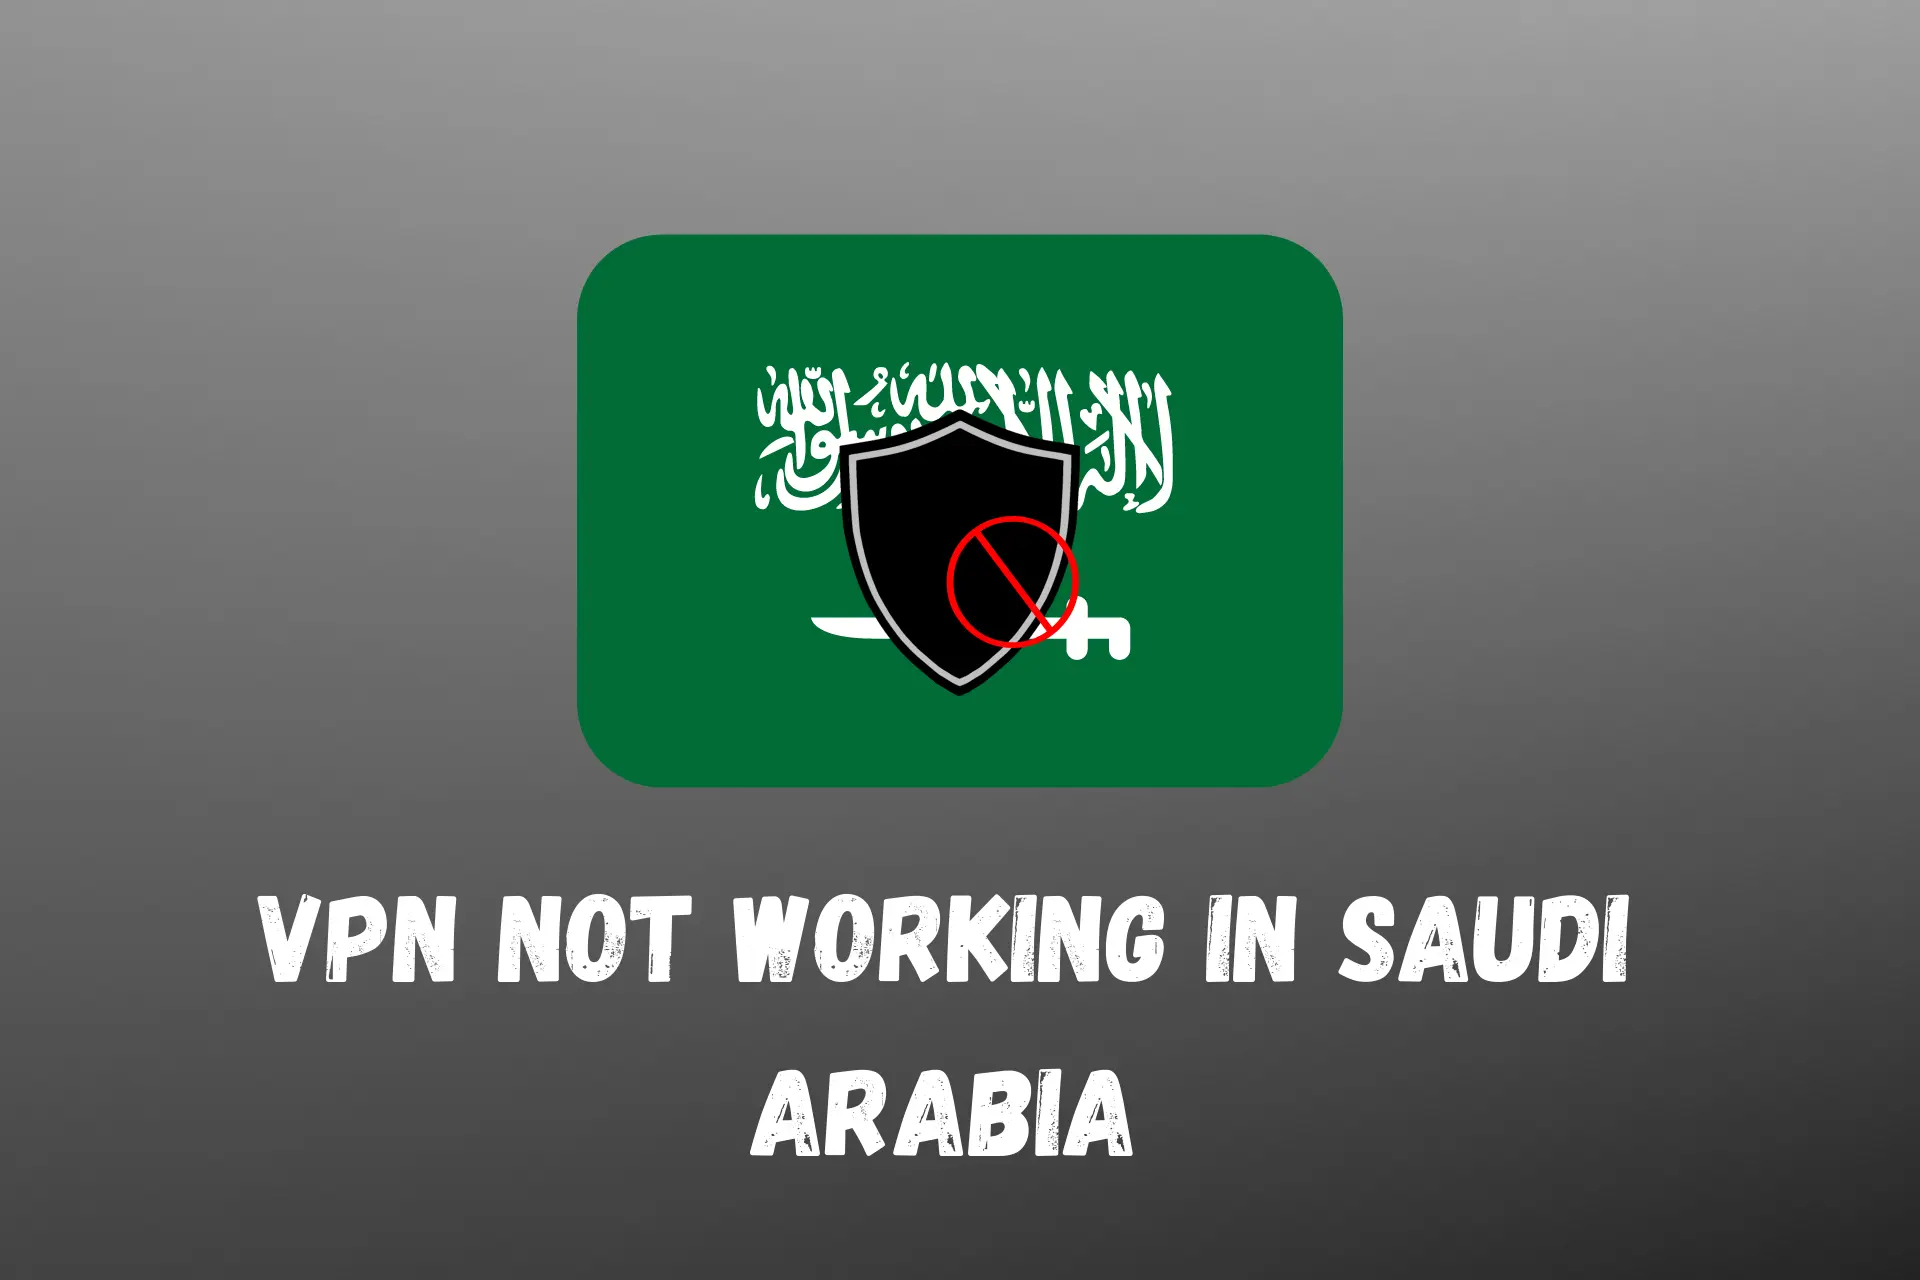 VPN NOT WORKING IN SAUDI ARABIA